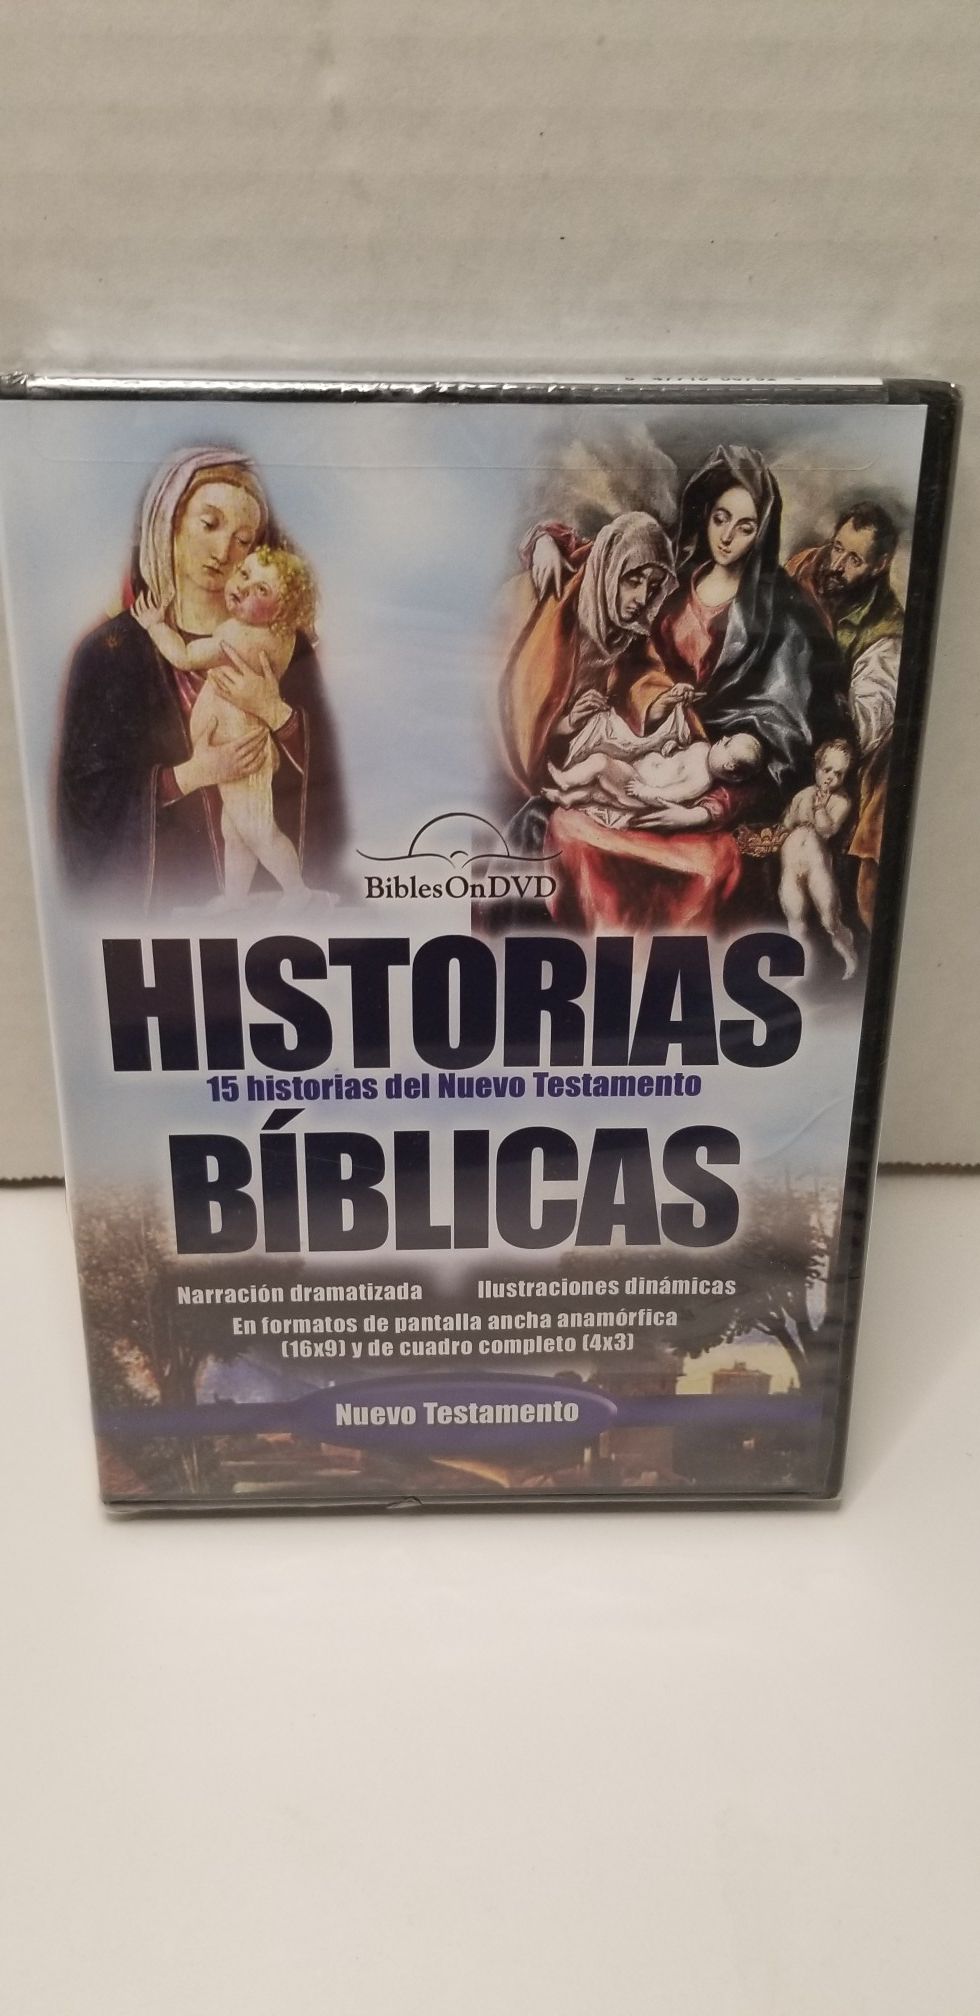 Historias biblicas dvd